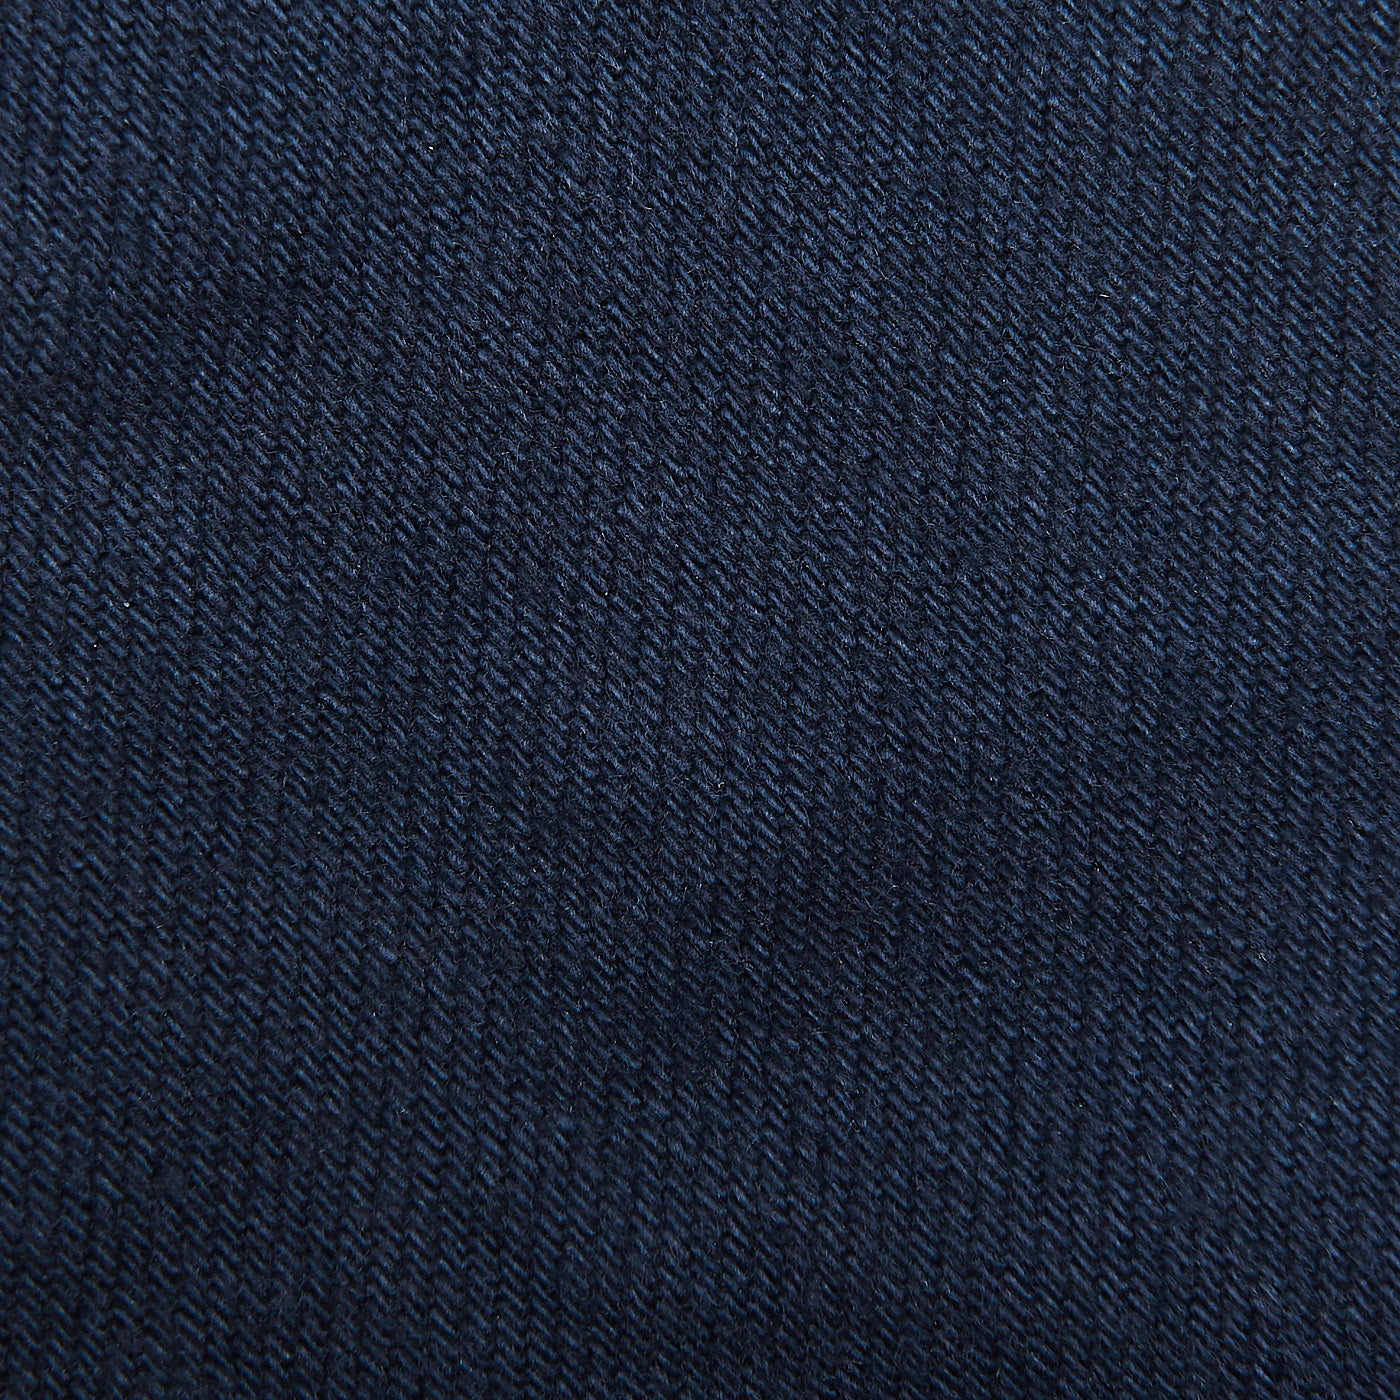 C.O.F Studio Navy Blue Candiani Cotton M7 Jeans Fabric